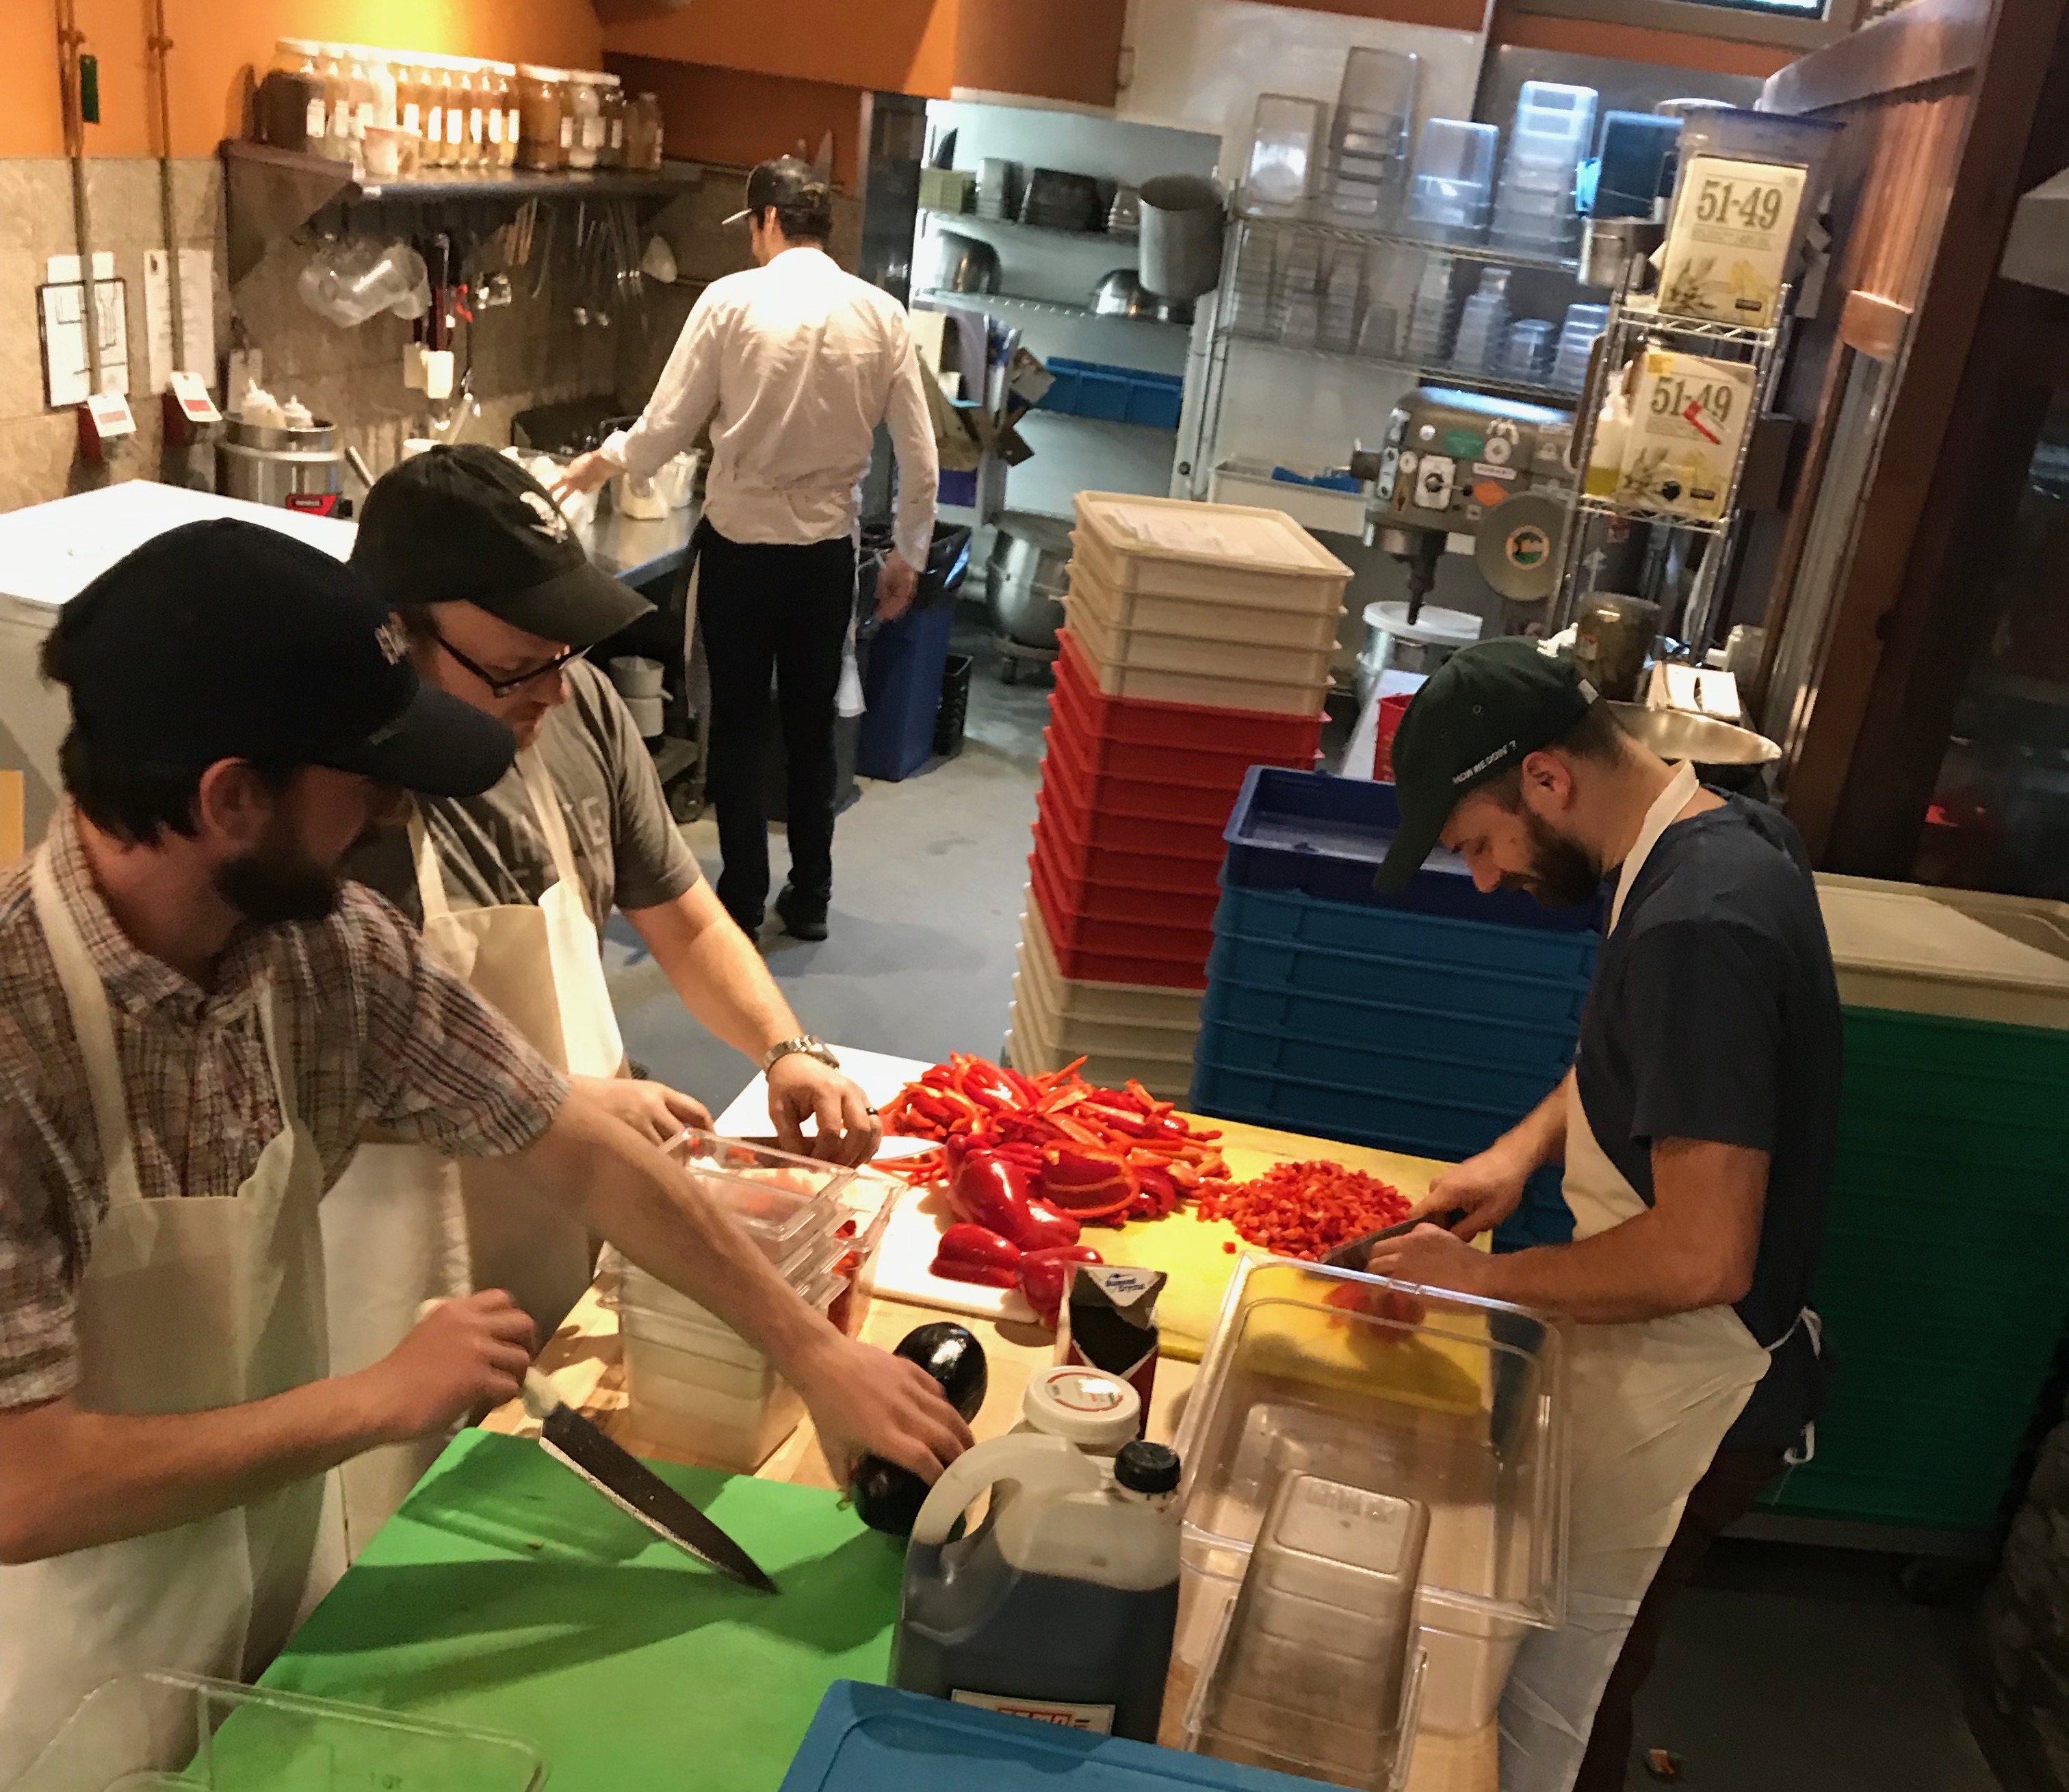 Flatbread employees prepping food